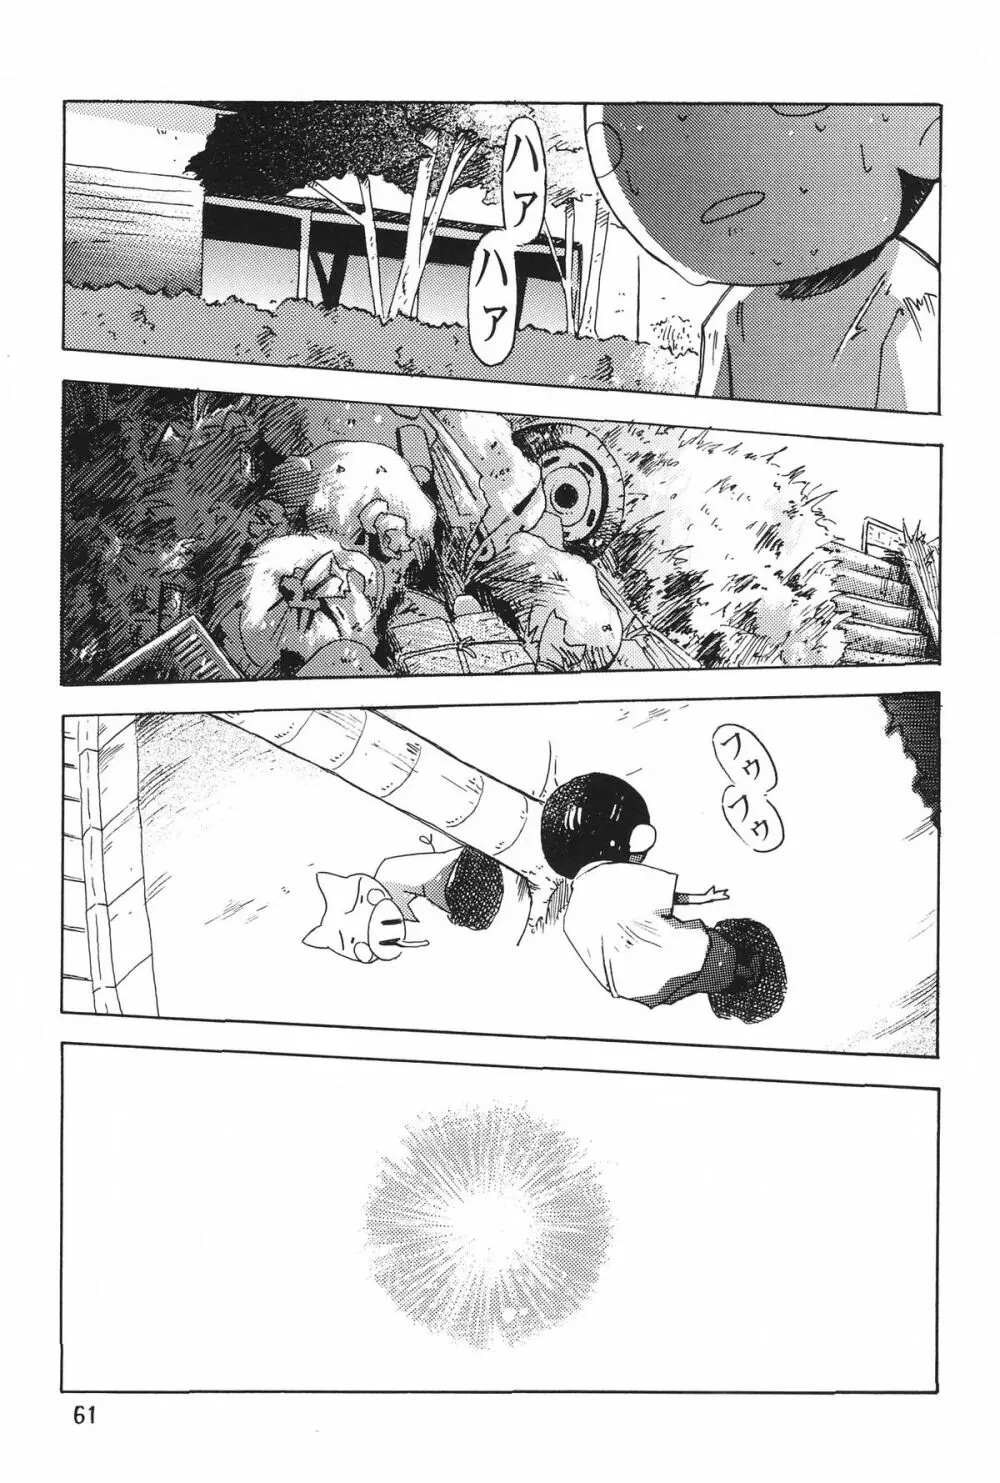 片励会 '98夏SPECIAL - page61